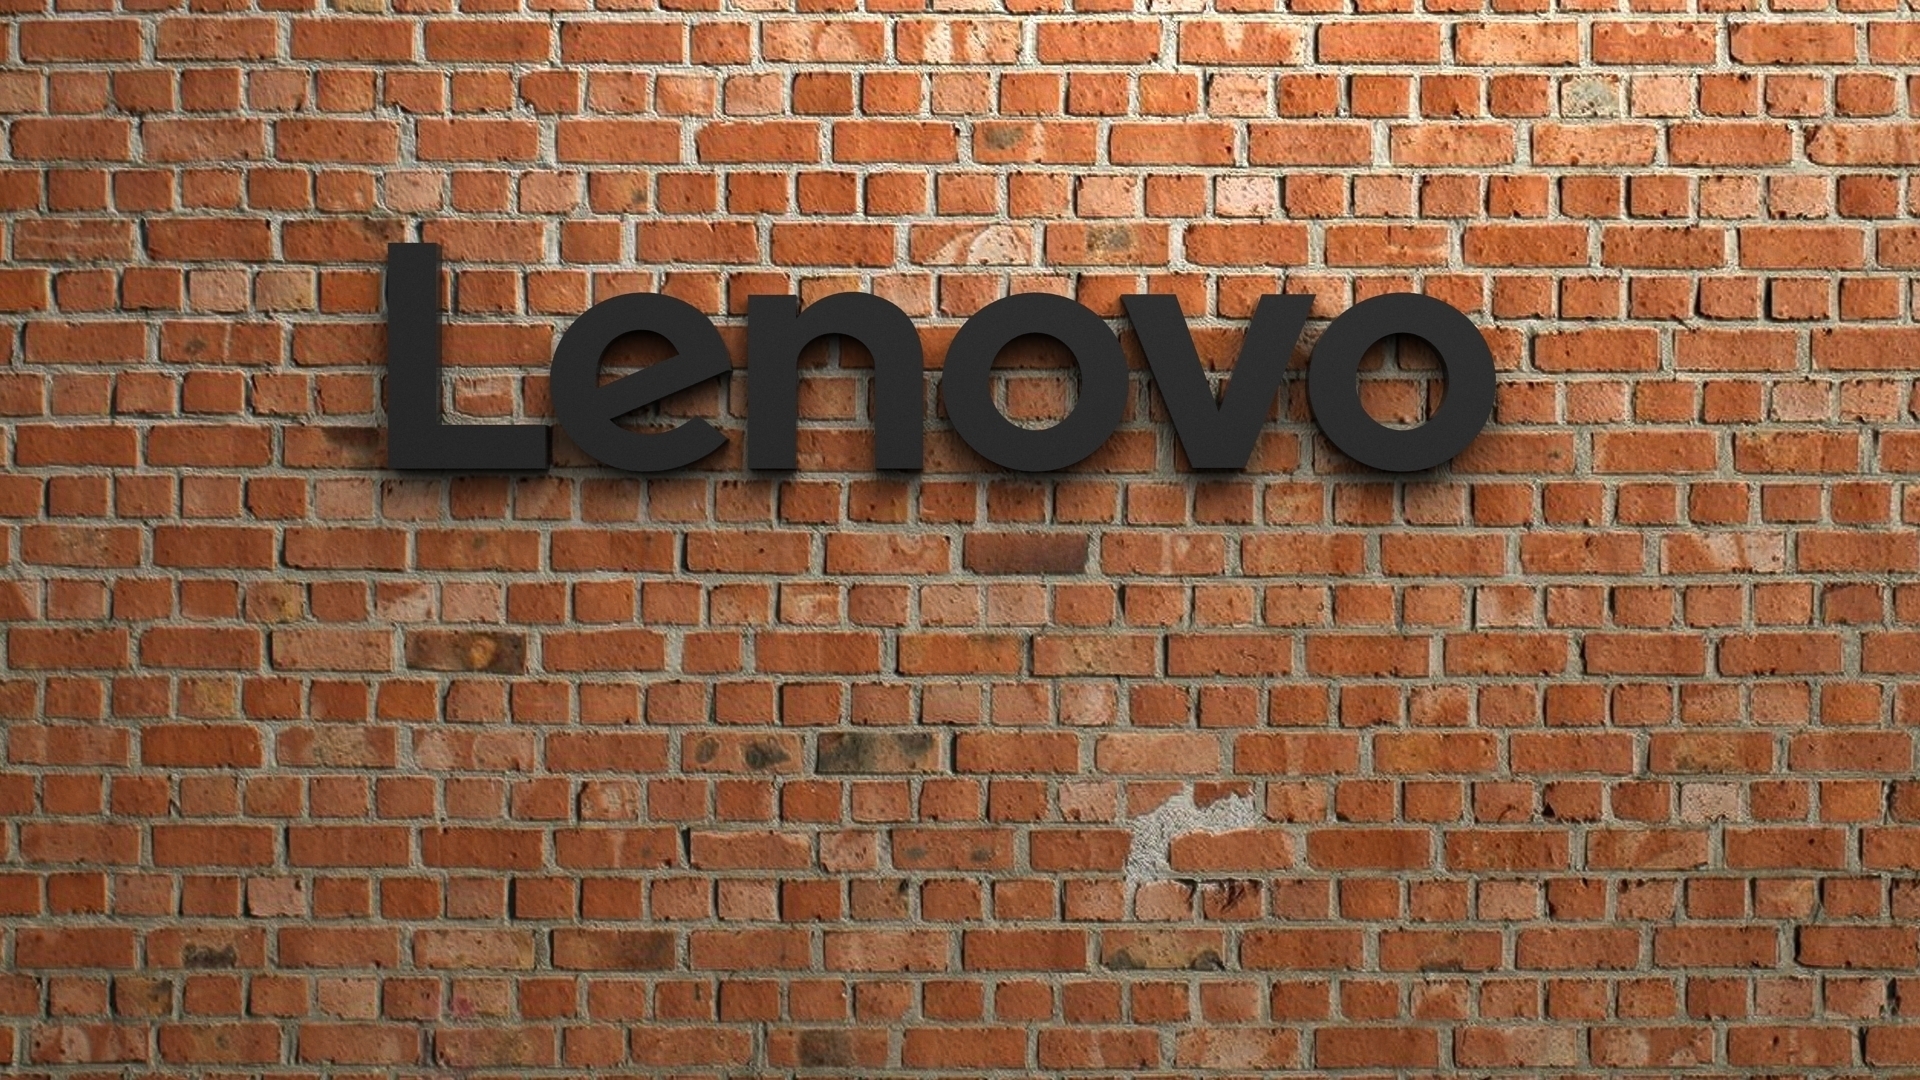 lenovo logo wallpaper